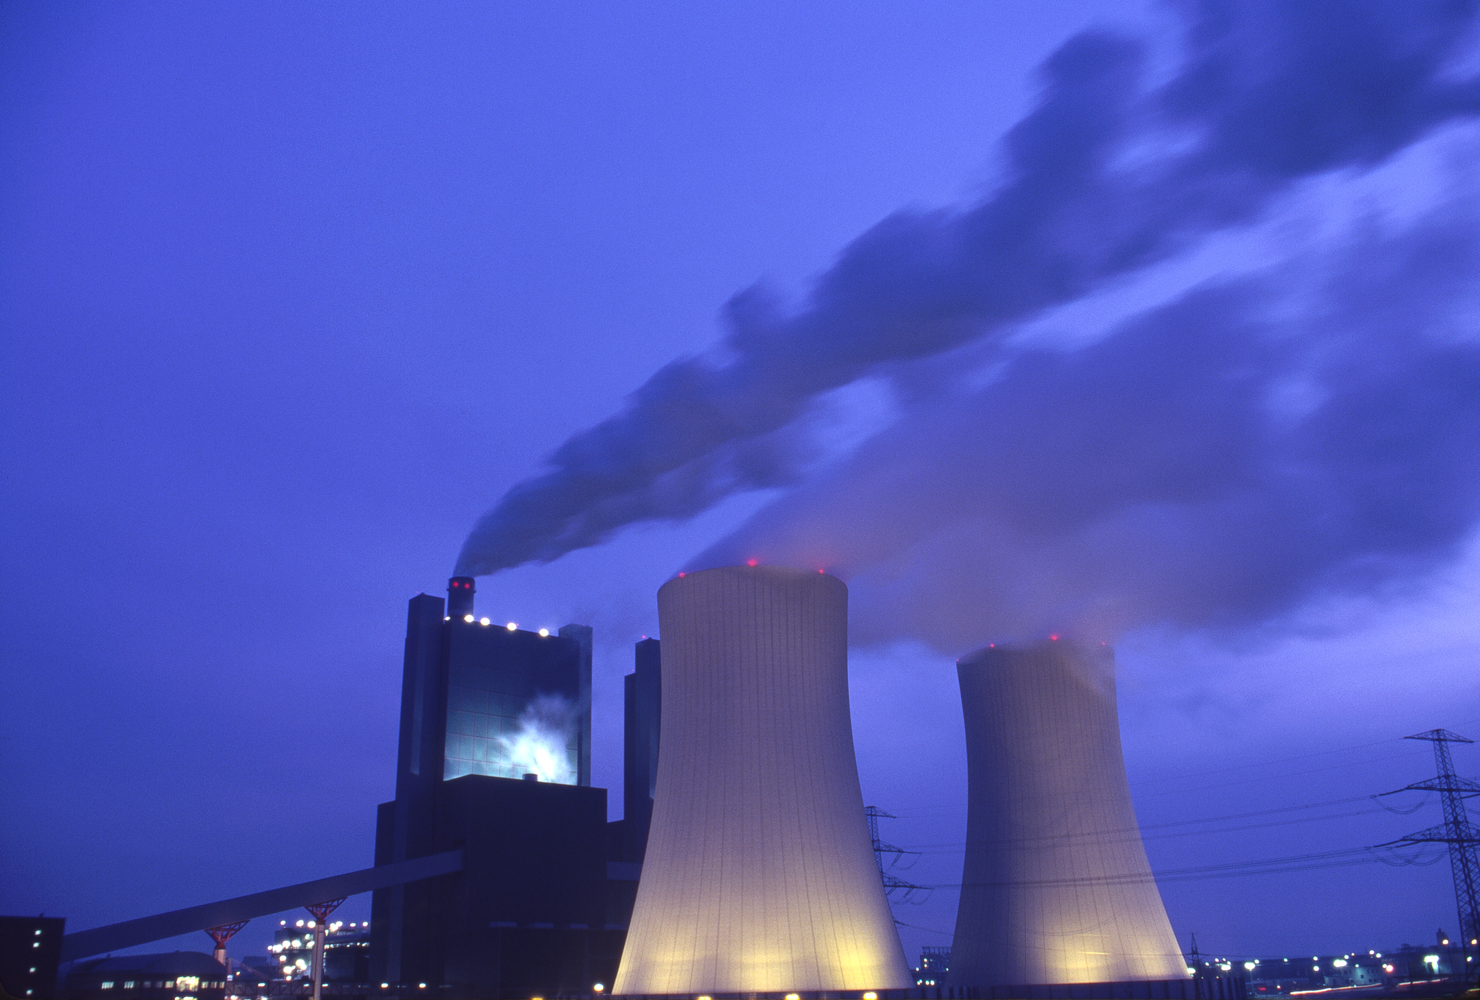 The Schkopau power station in Saxony-Anhalt, germany, has a 916 megawatt capacity and burns brown lignite coal